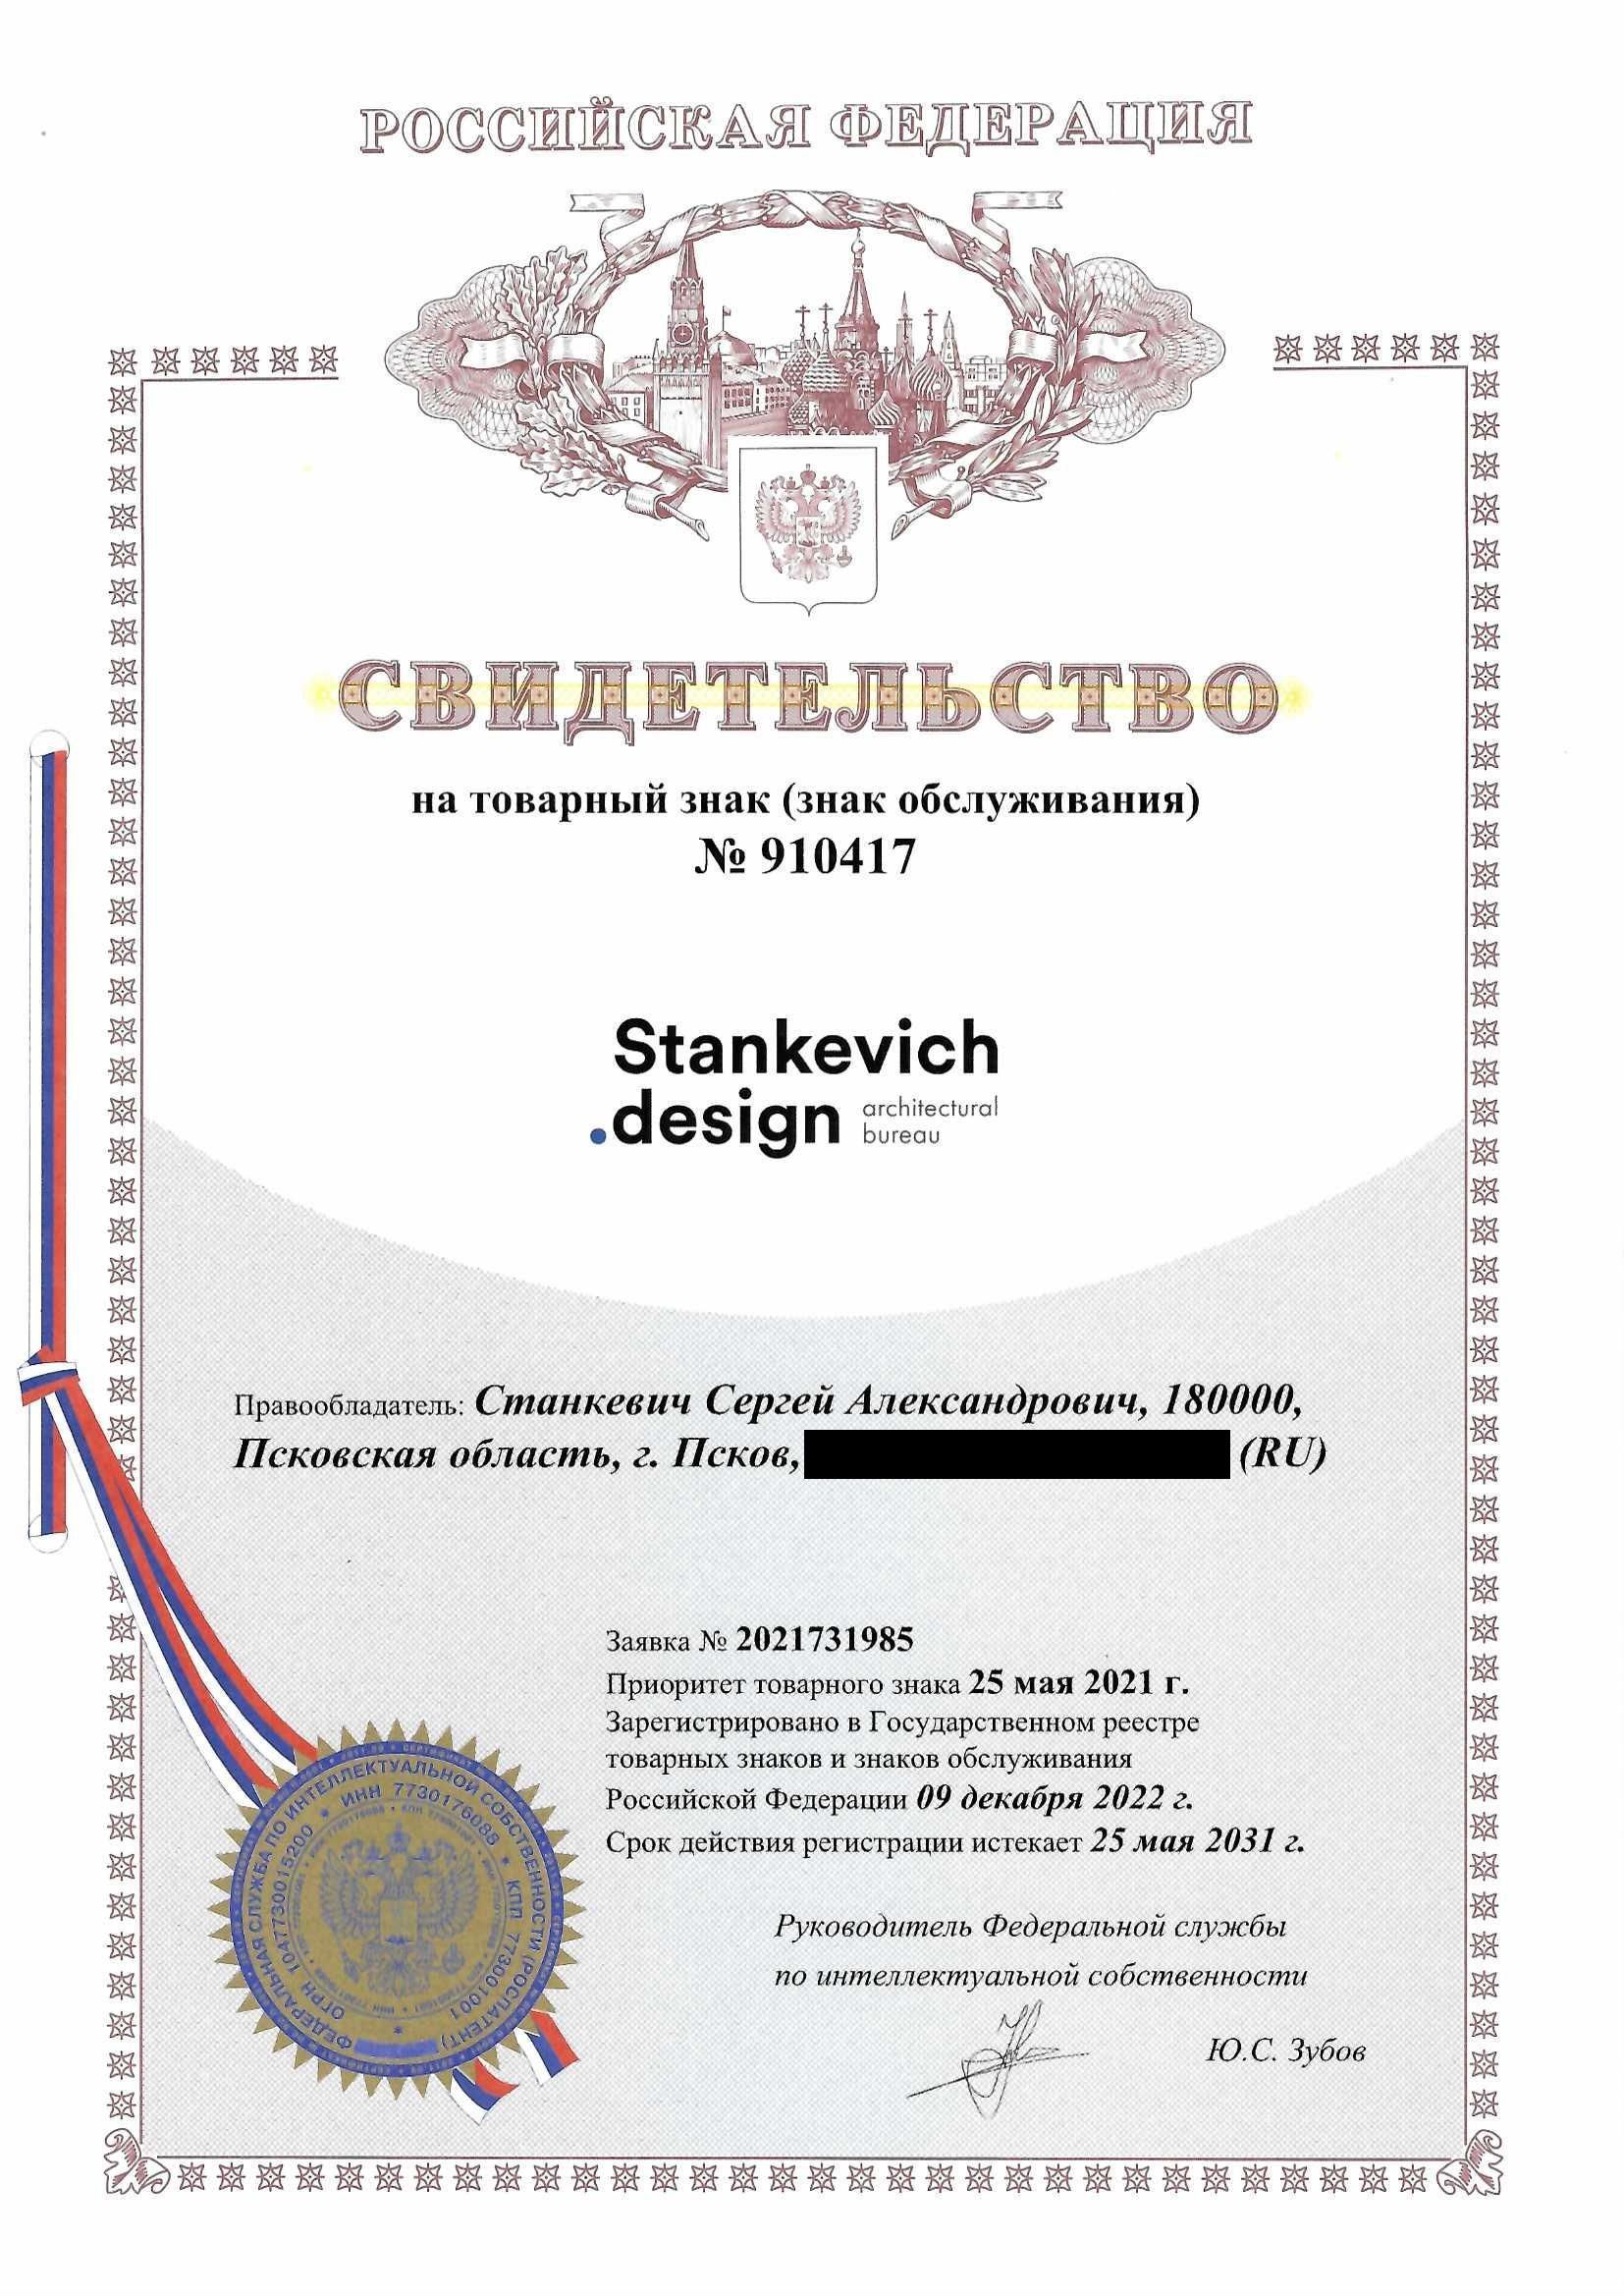 Товарный знак № 910417 – Stankevich design architectural bureau